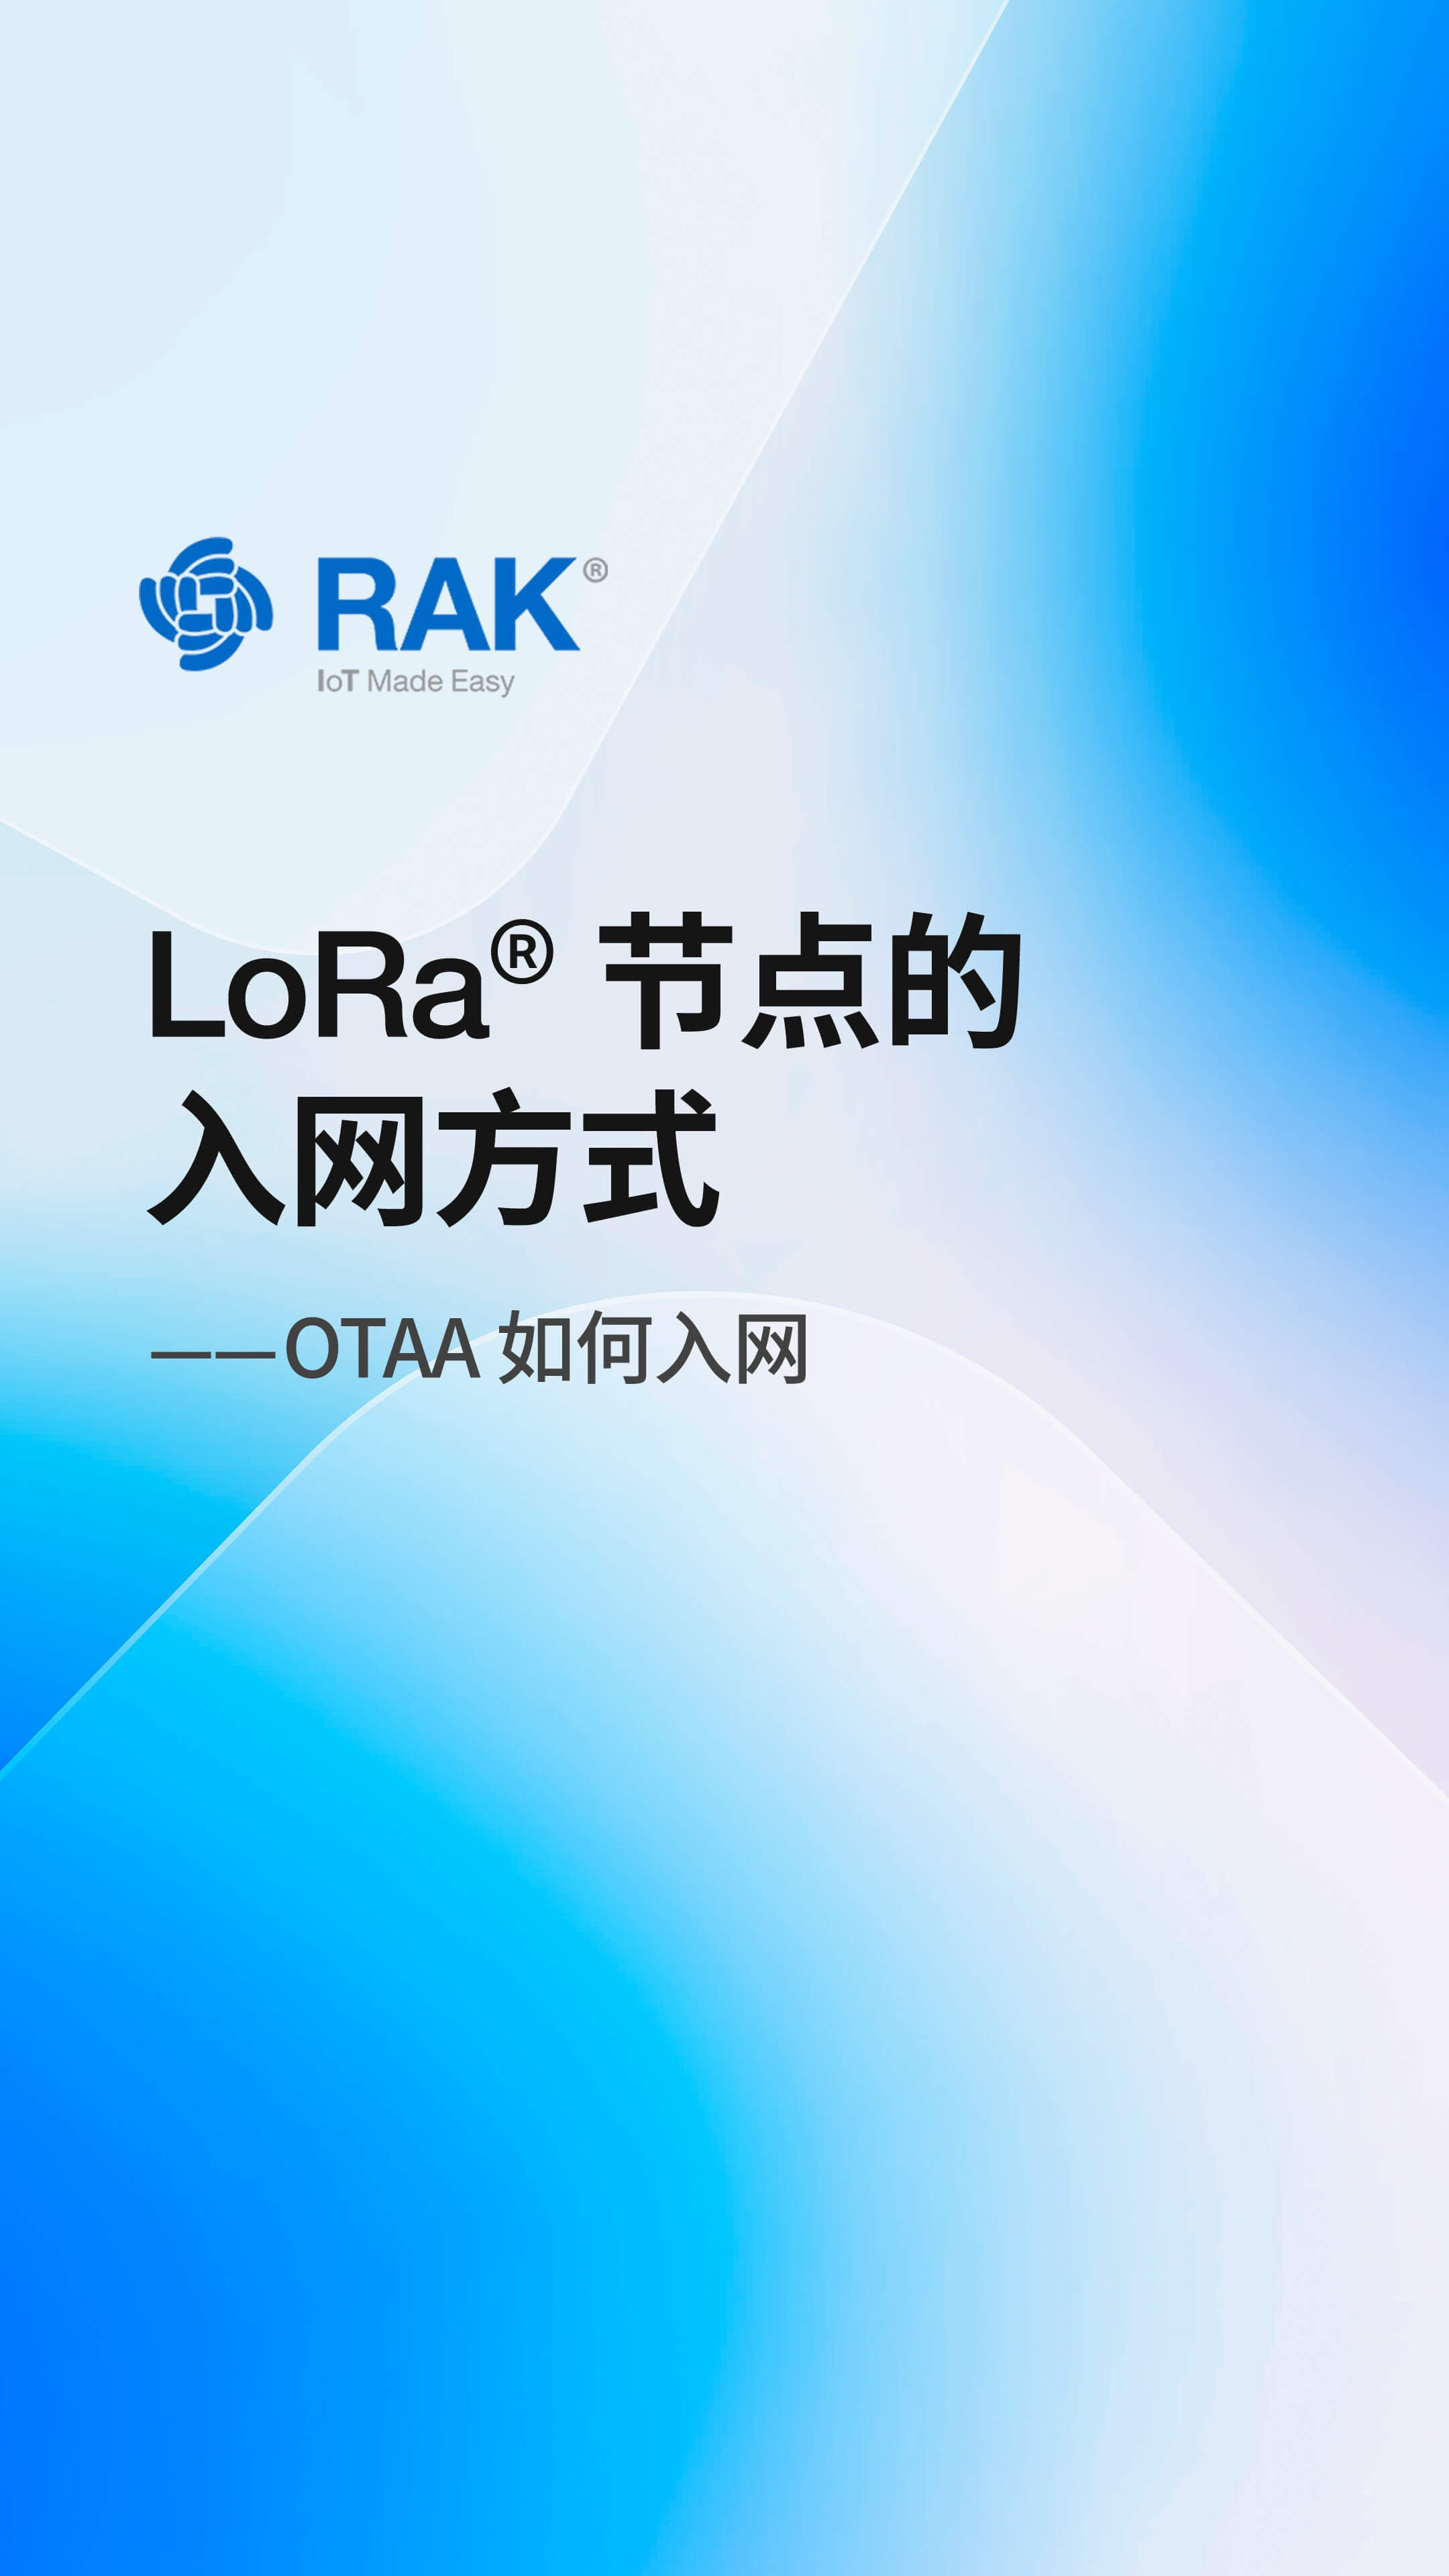 LoRa® 节点的入网方式 — OTAA 如何入网
#LoRa终端 #入网方式 #LoRa故事汇 #瑞科慧联 